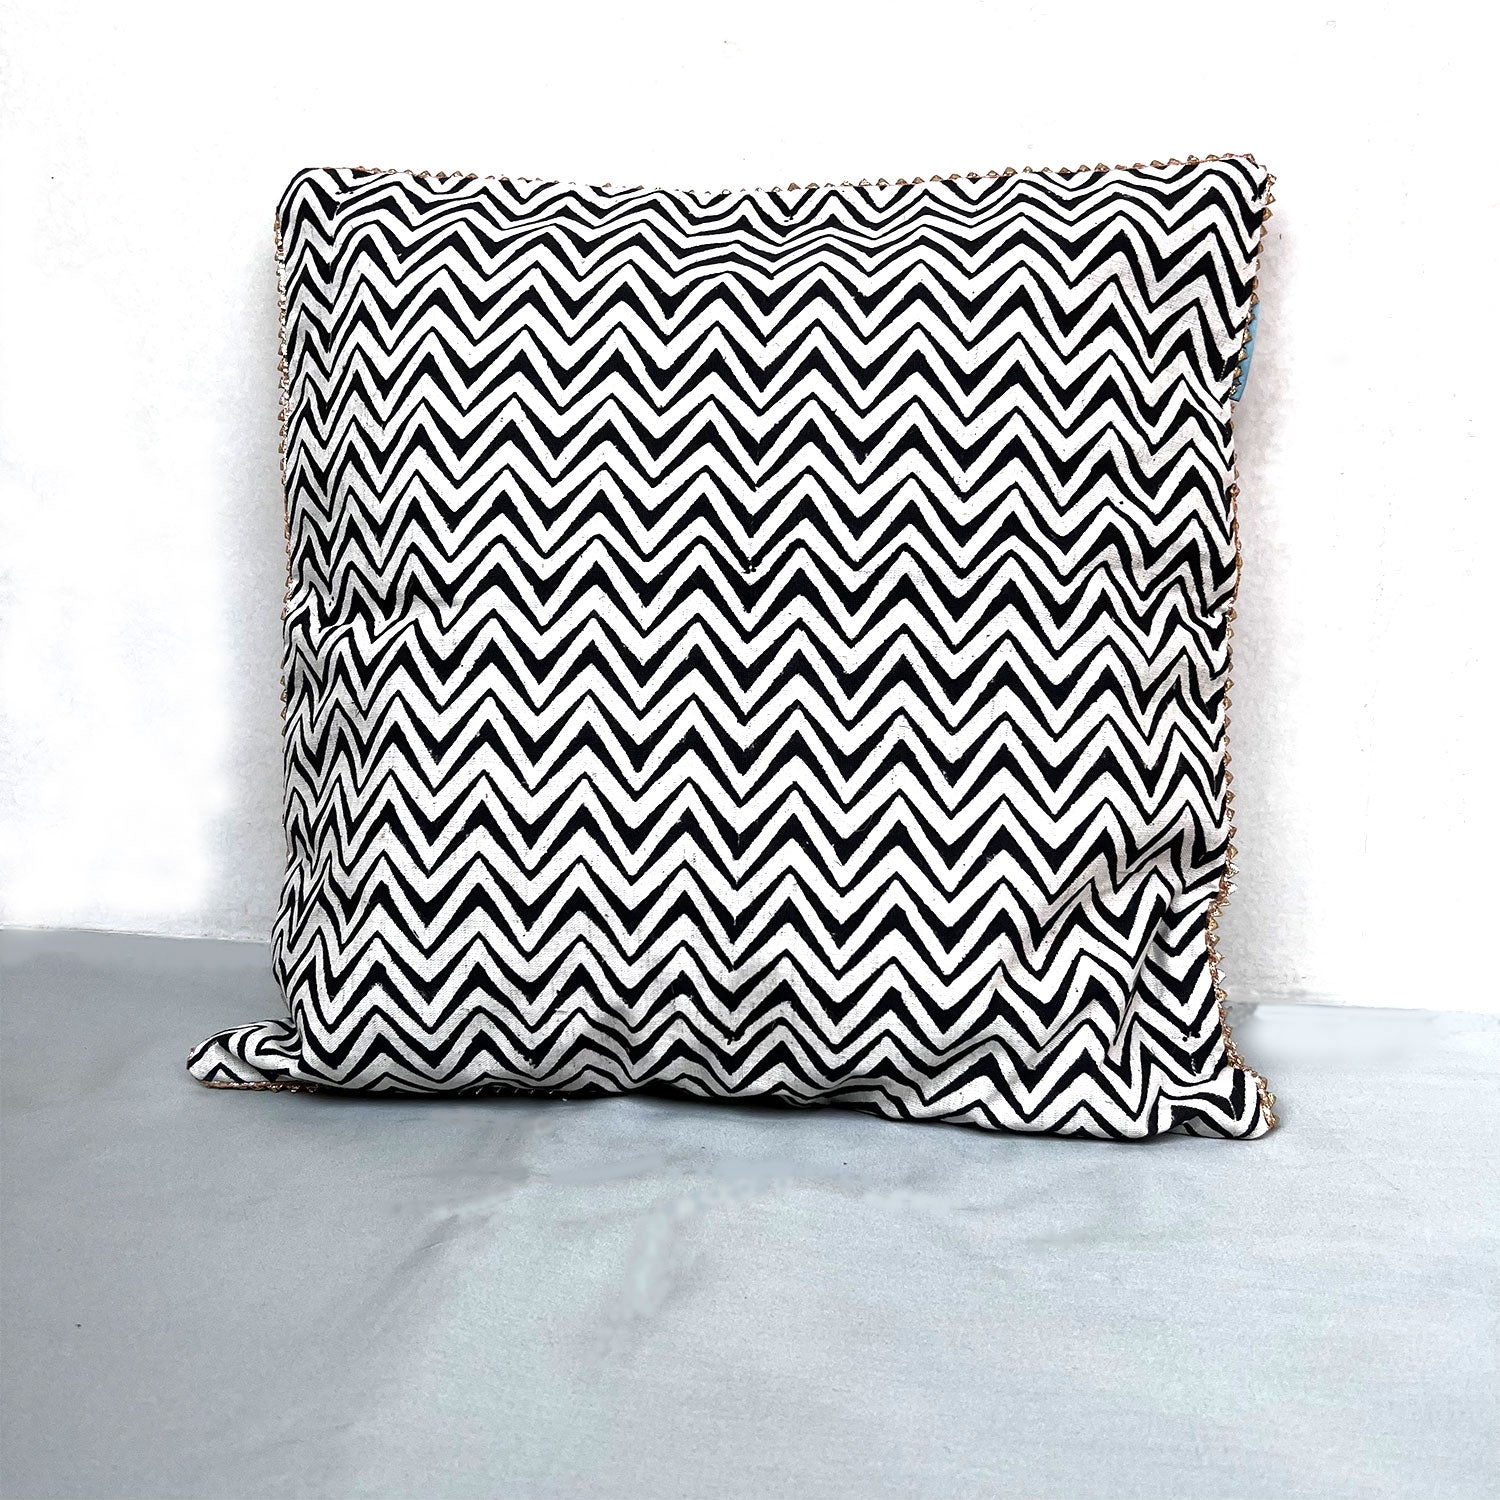 Zig-Zag Black & White Pure Cotton Cushion Cover - 16 x 16 inches